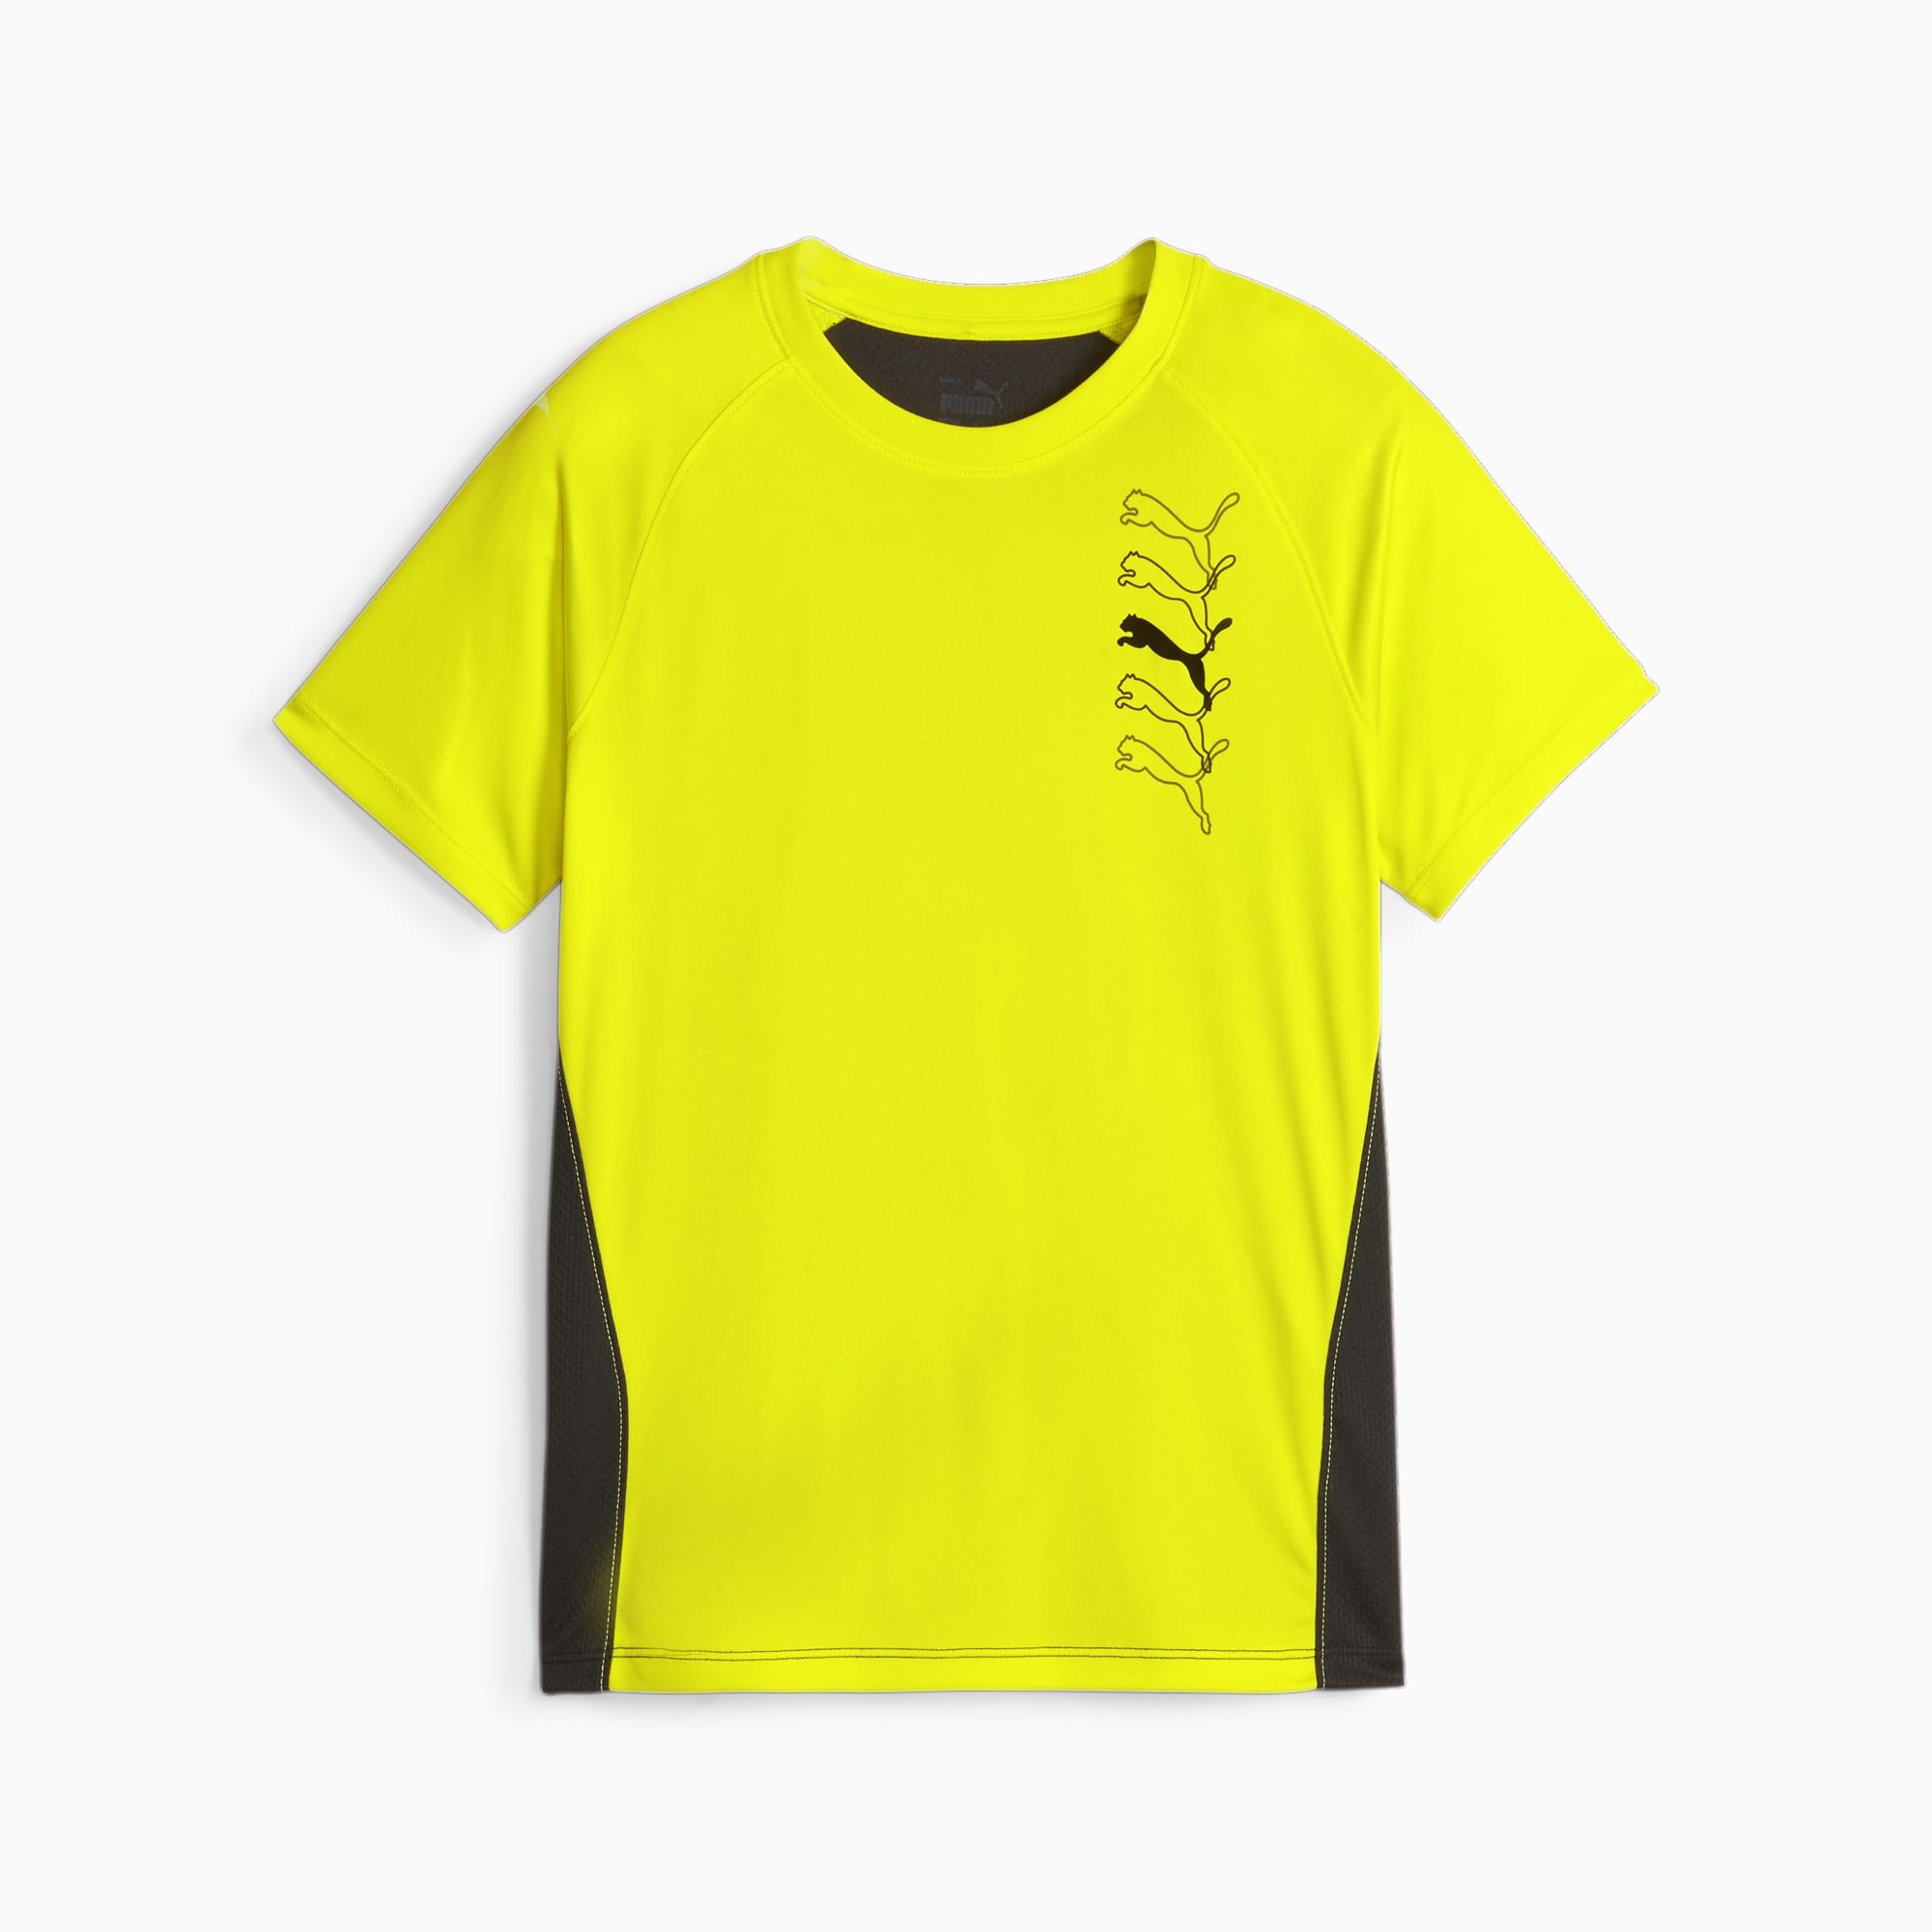 PUMA Fit Youth T-Shirt, Yellow Burst, Size 116, Clothing